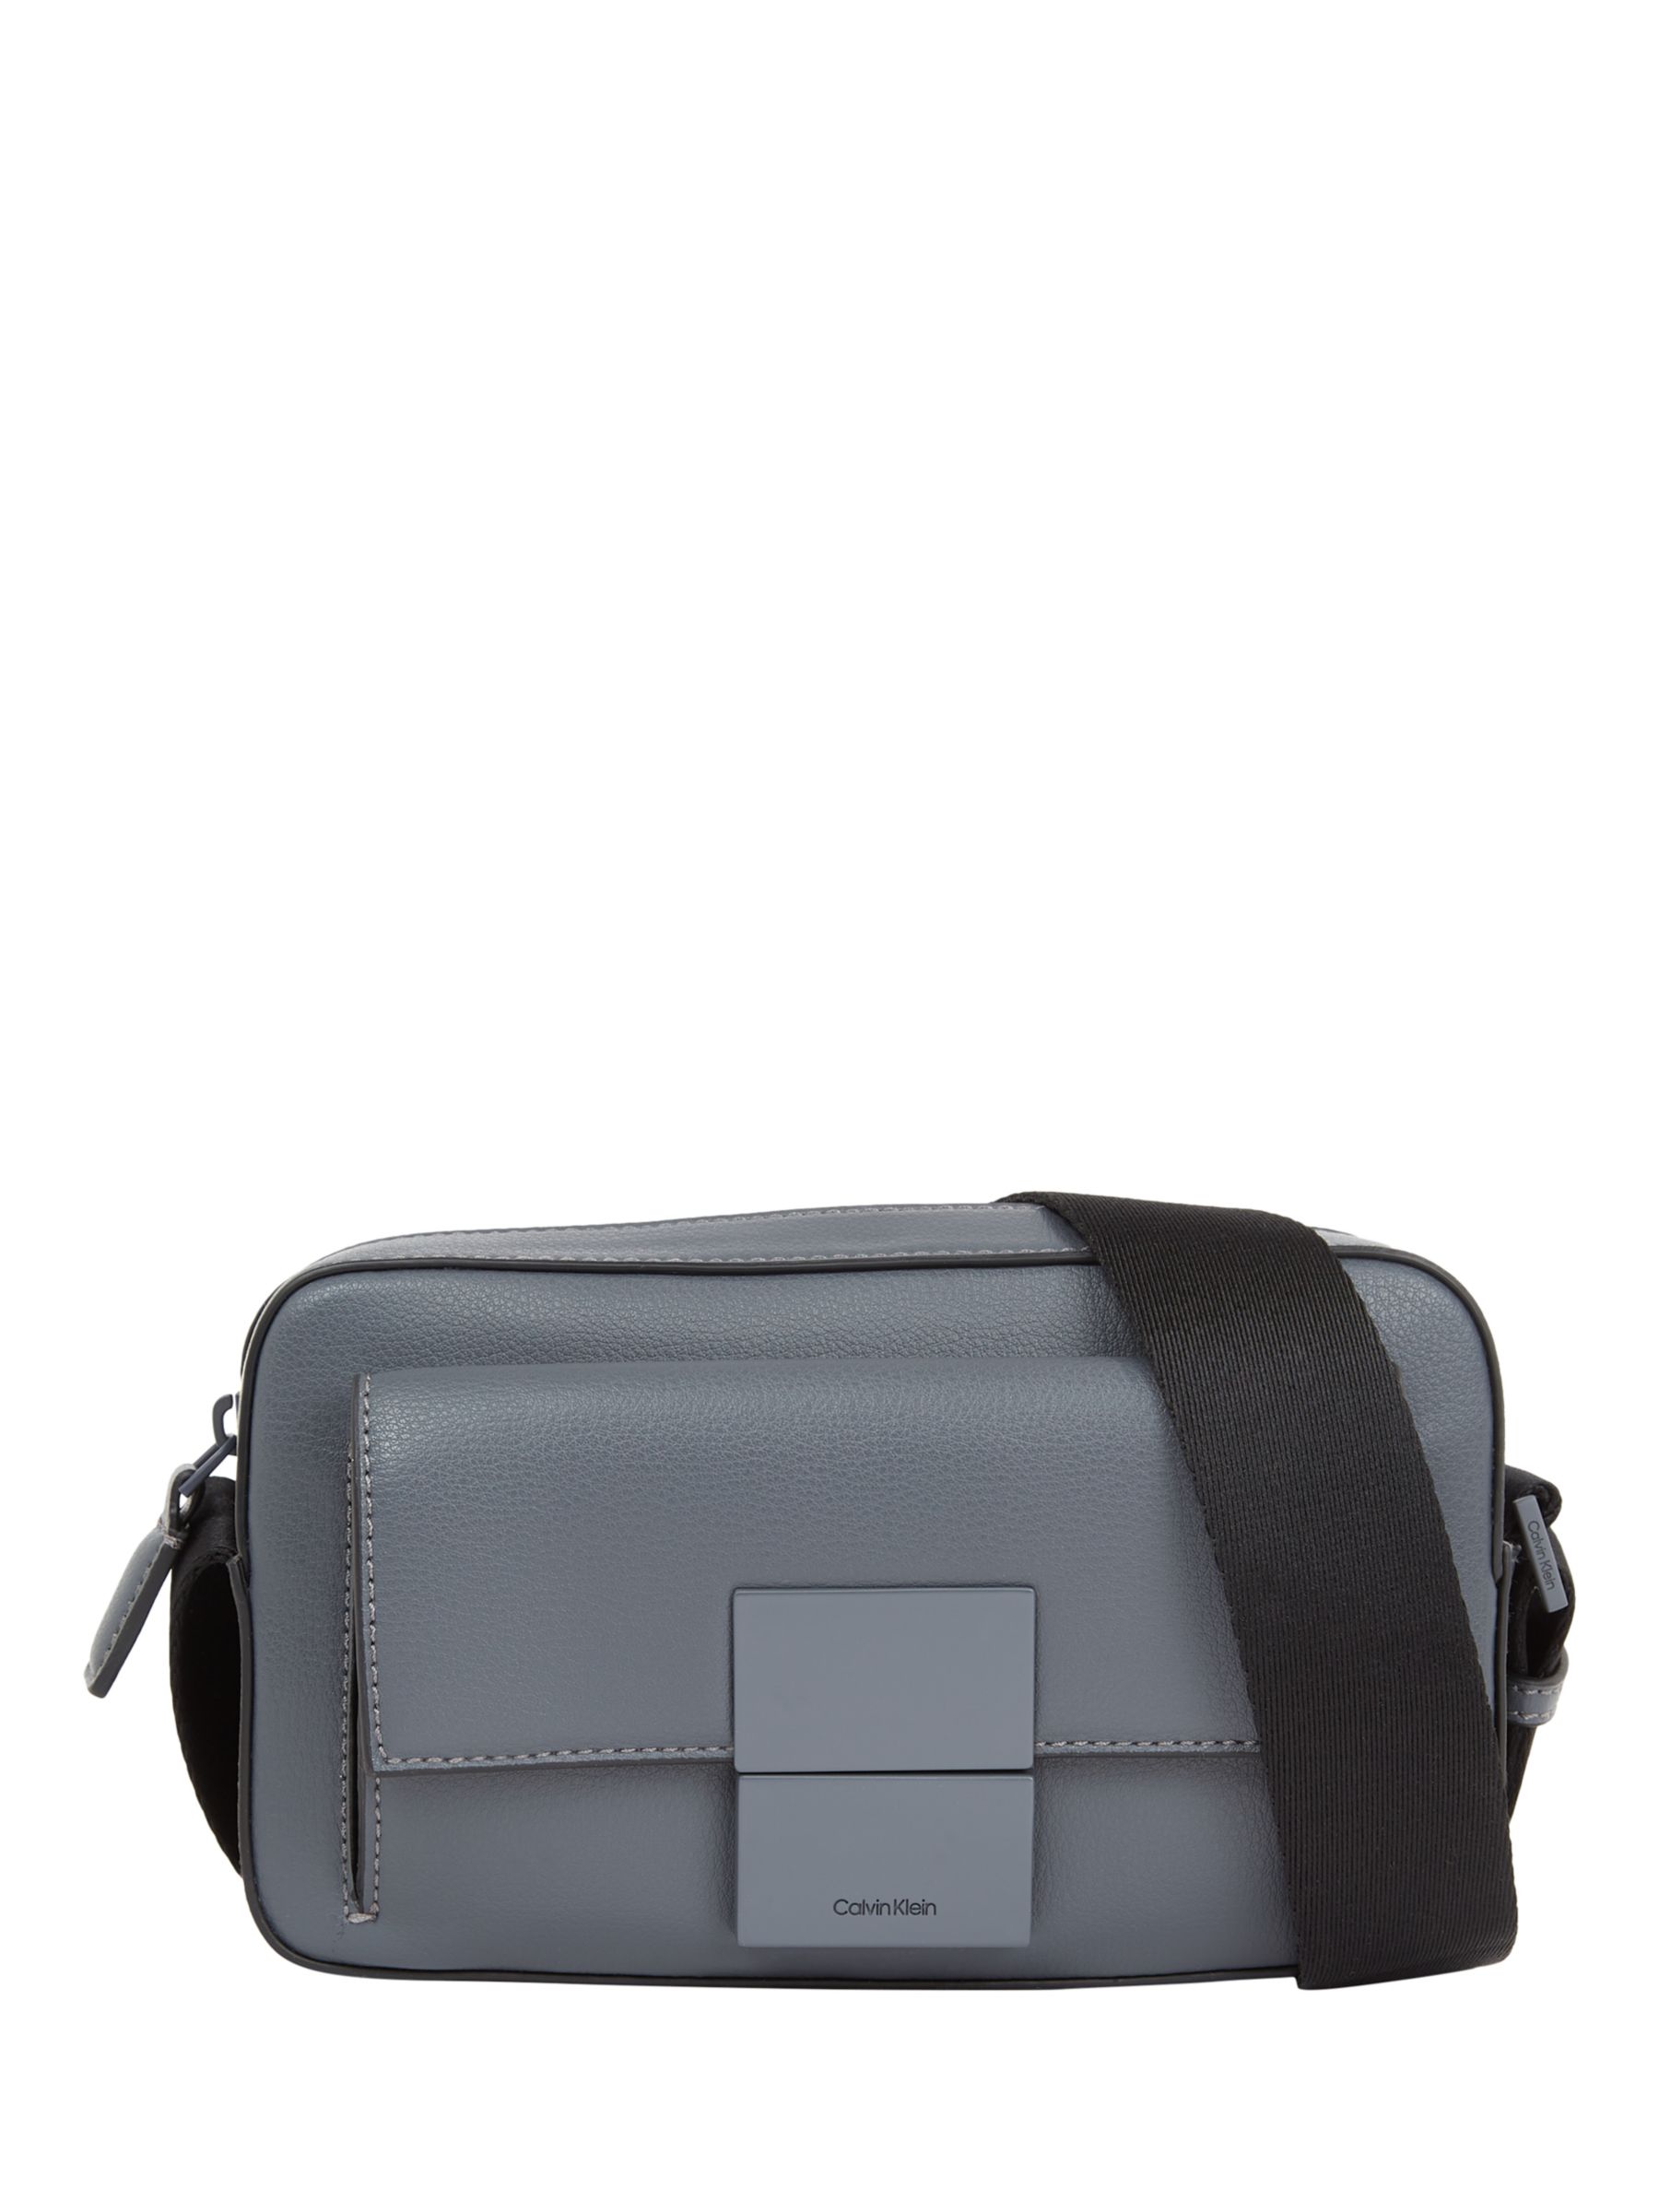 Calvin Klein Camera Crossover Bag, Grey, One Size